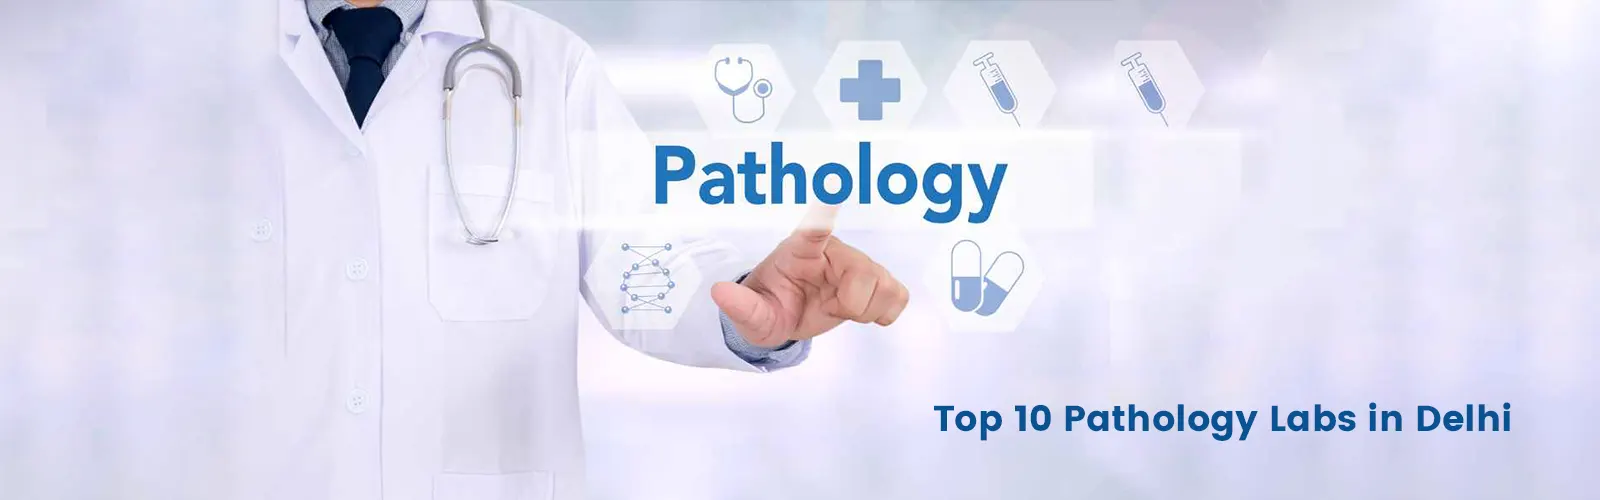 Top 10 Pathology Labs in Delhi